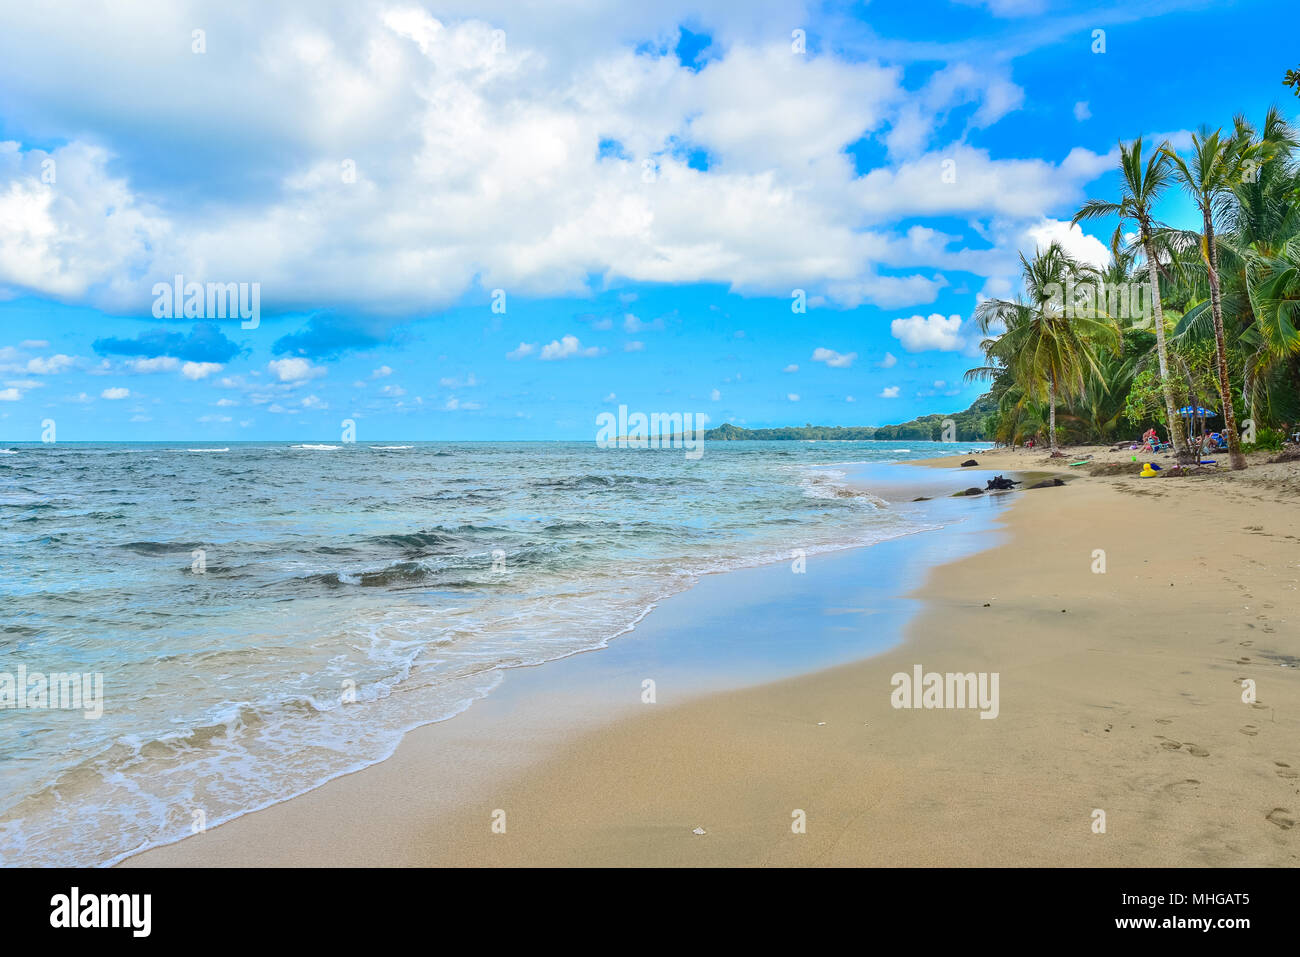 Playa Cocles - beautiful tropical beach close to Puerto Viejo - Costa Rica Stock Photo